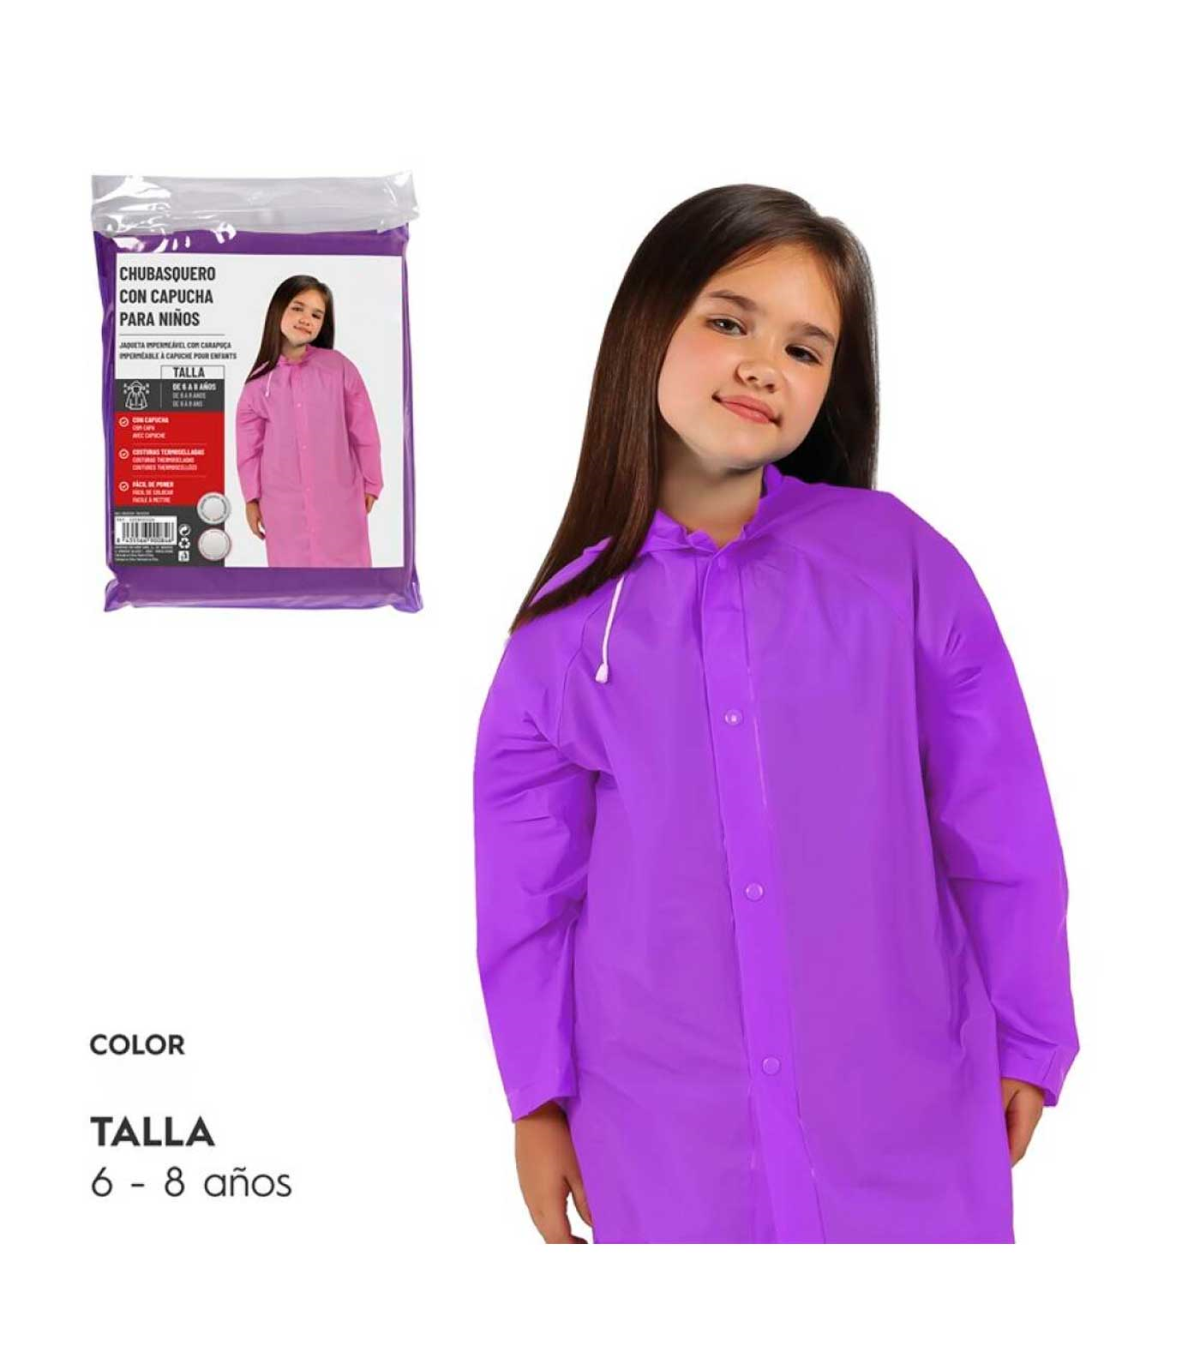 Tradineur - Chubasquero con capucha para niñas - Fabricado en poliéster -  Costura termoselladas - Talla para niños de 6 - 8 años